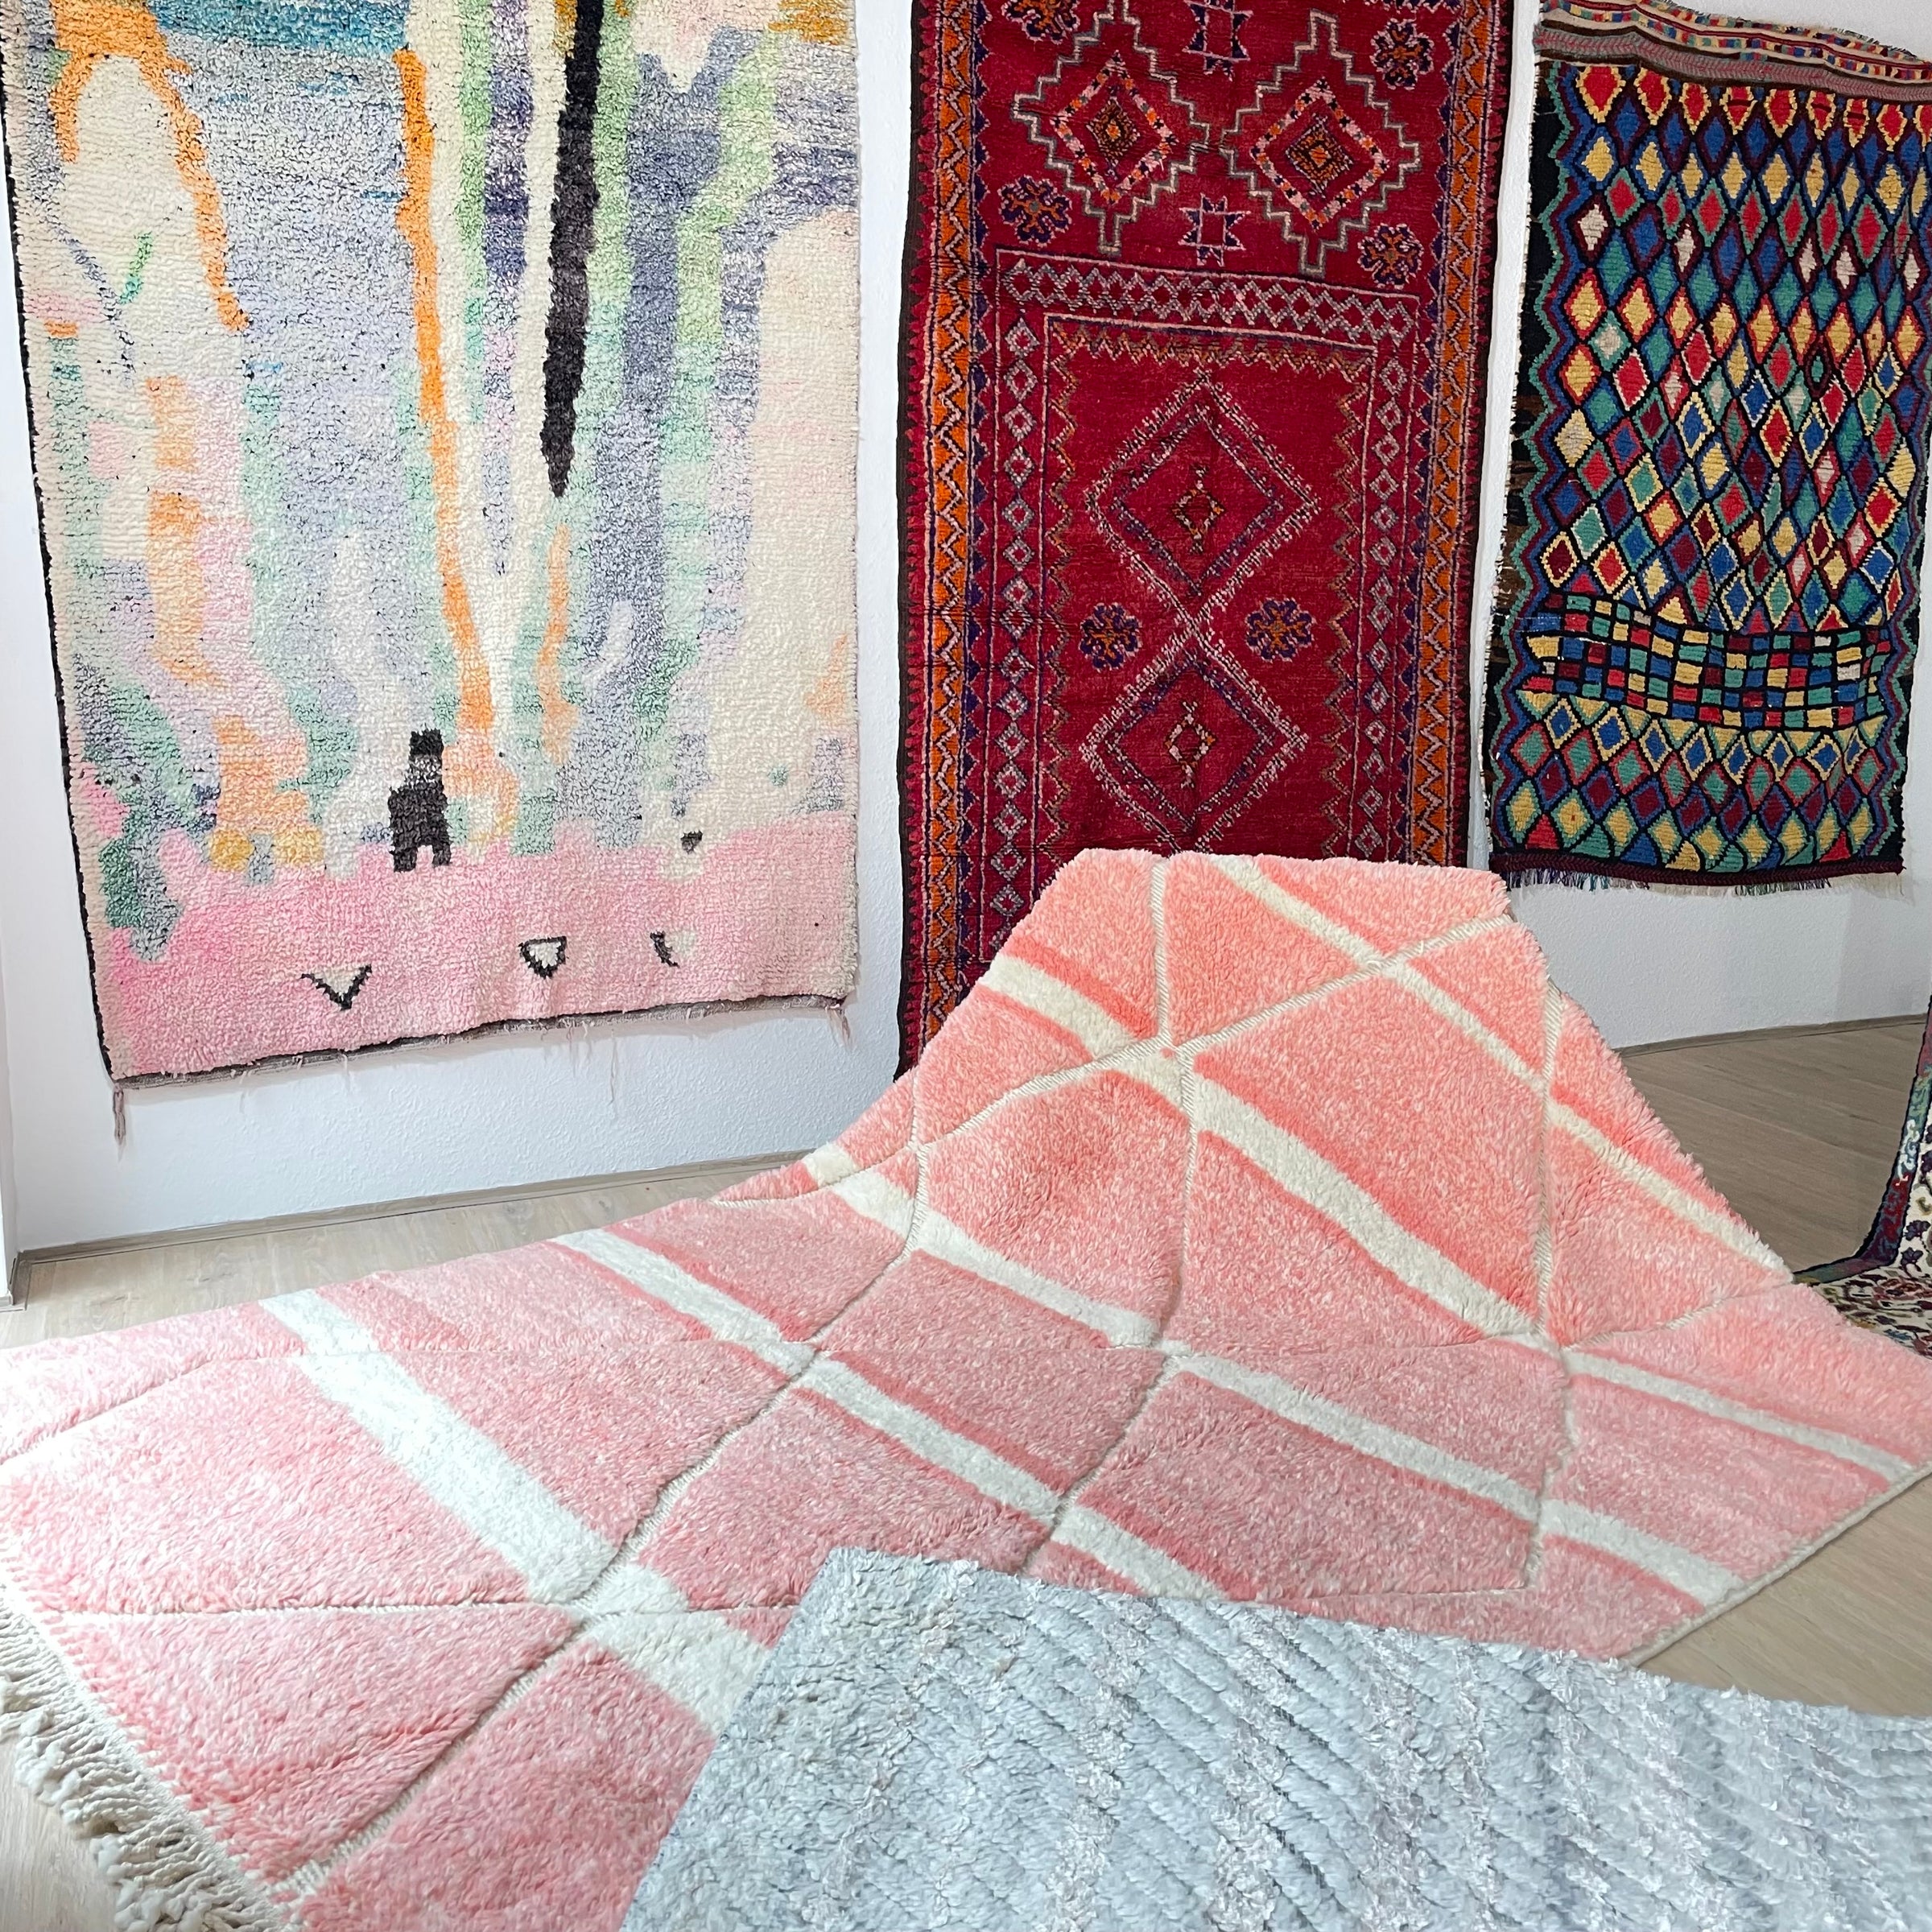 Medium size area rugs